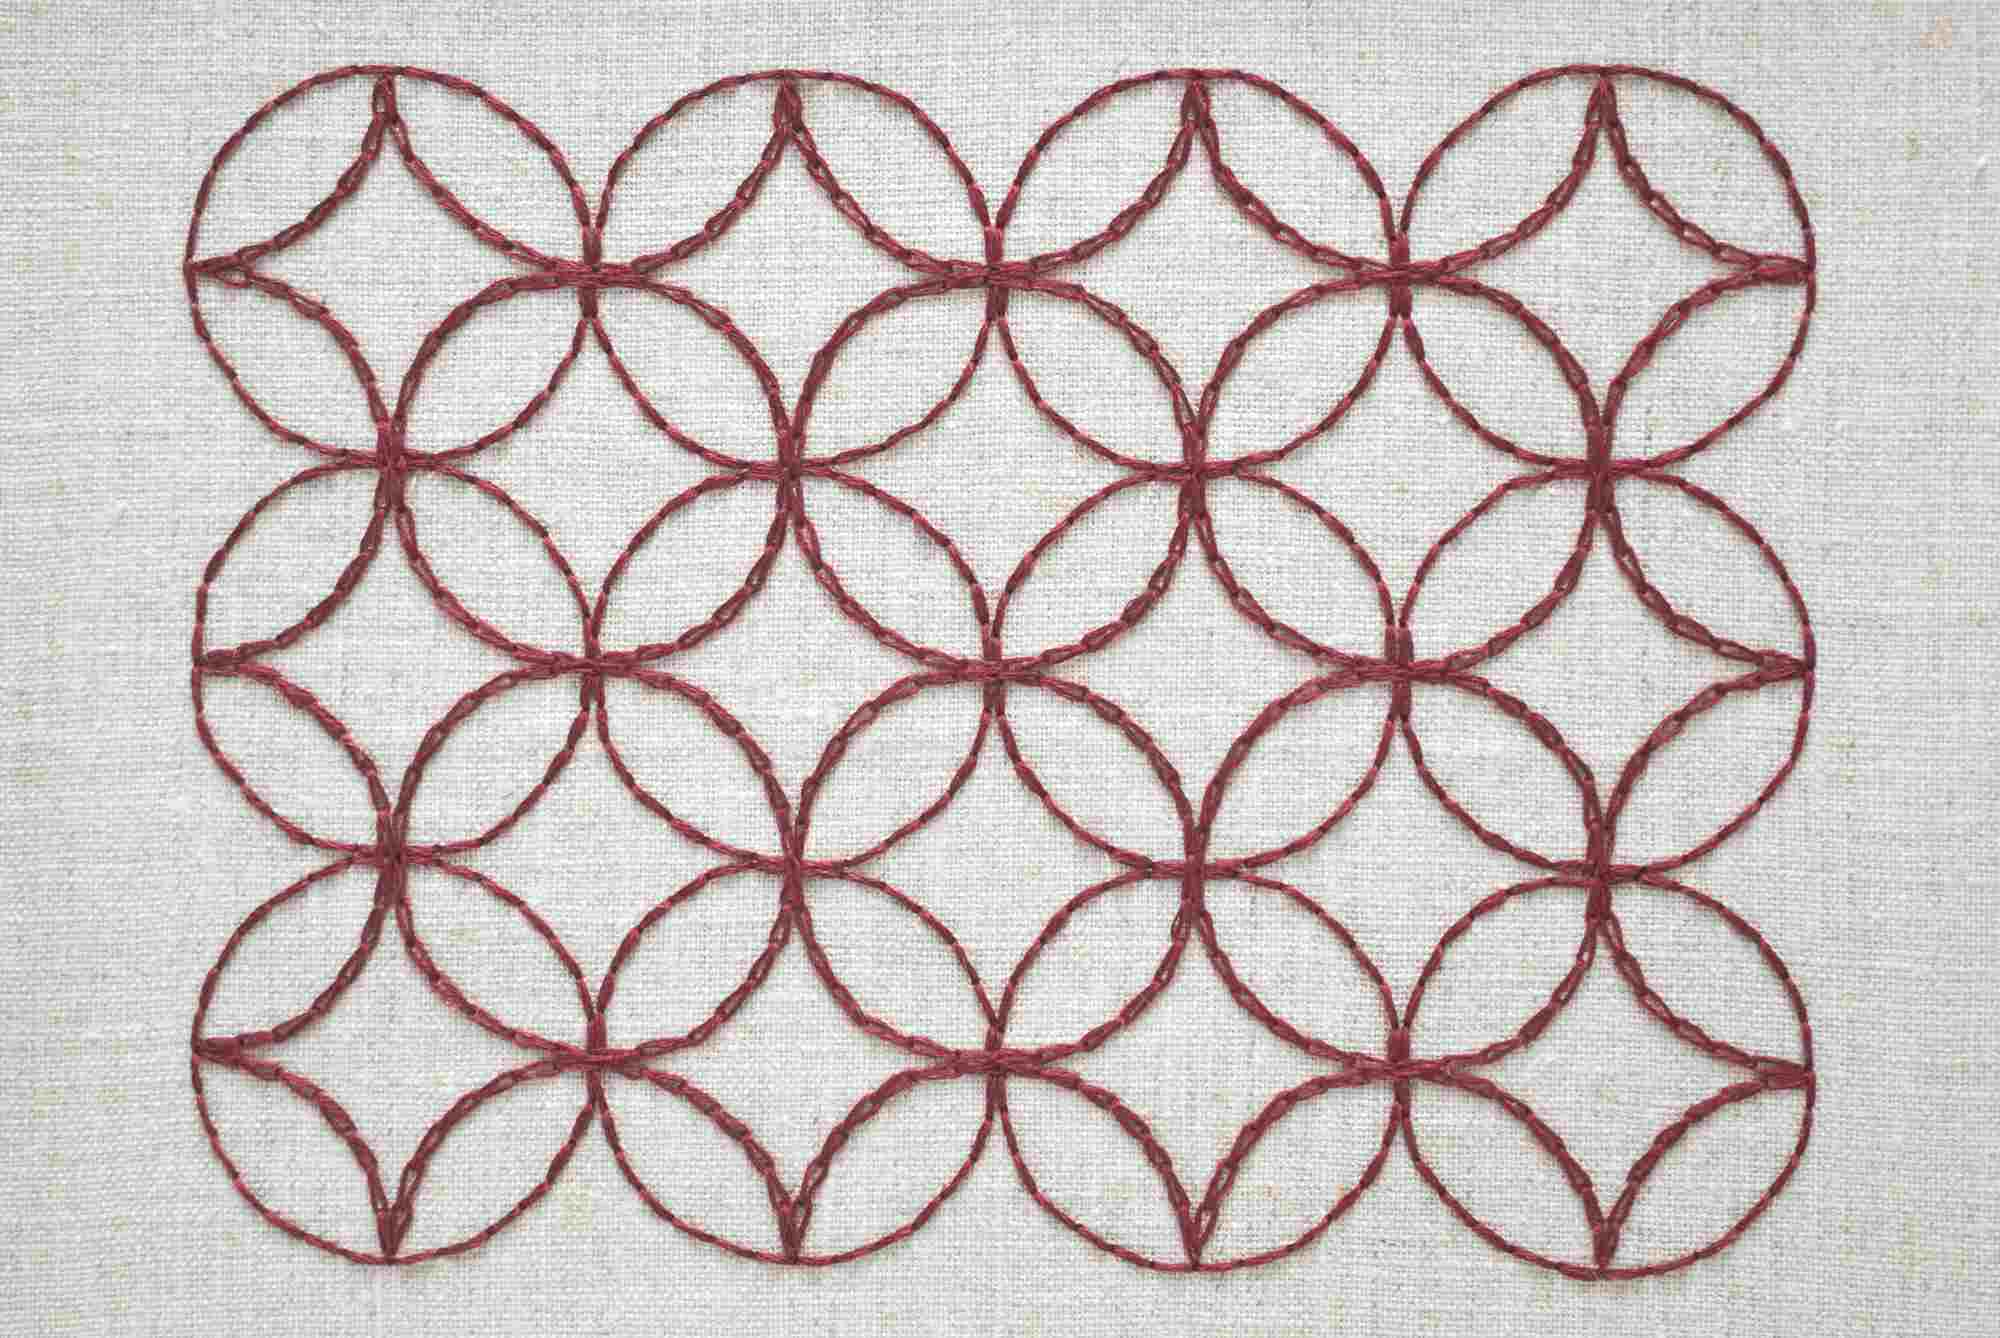 Sashiko Embroidery Patterns Sashiko Patterns Projects And Resources